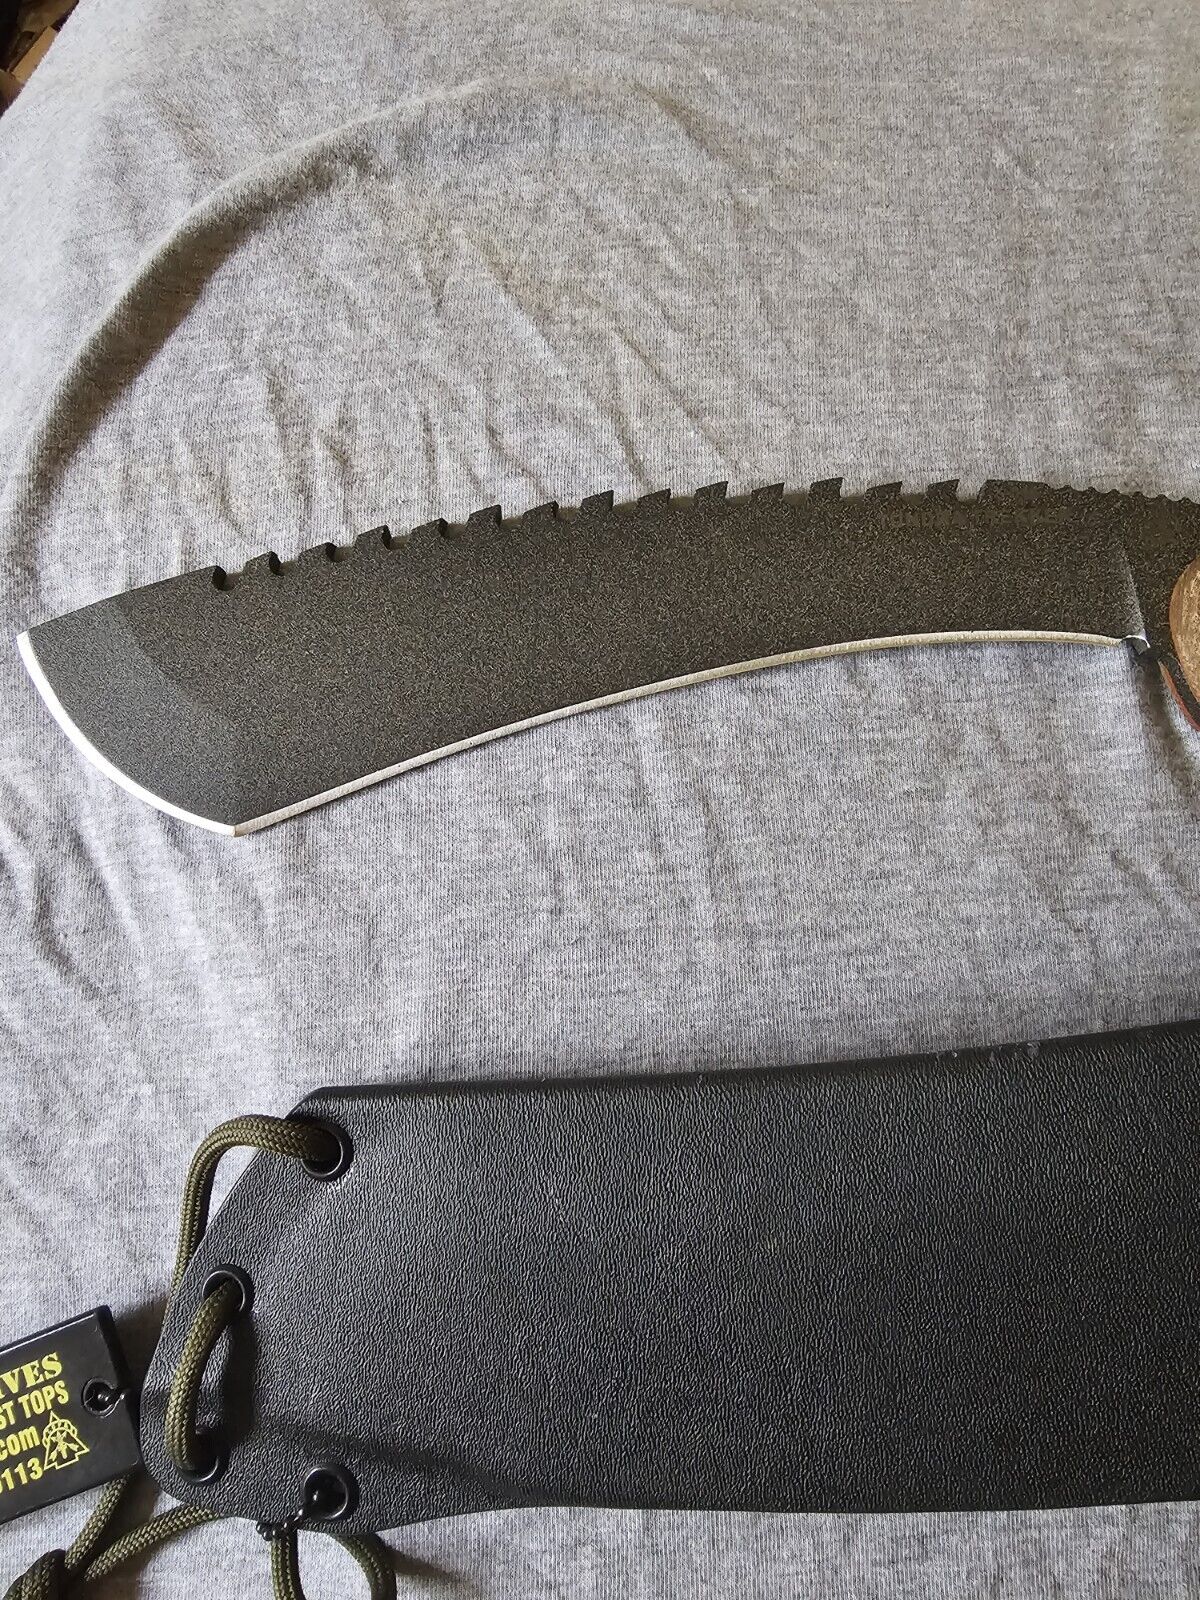 Tops Knives Tundra Trekker x-019